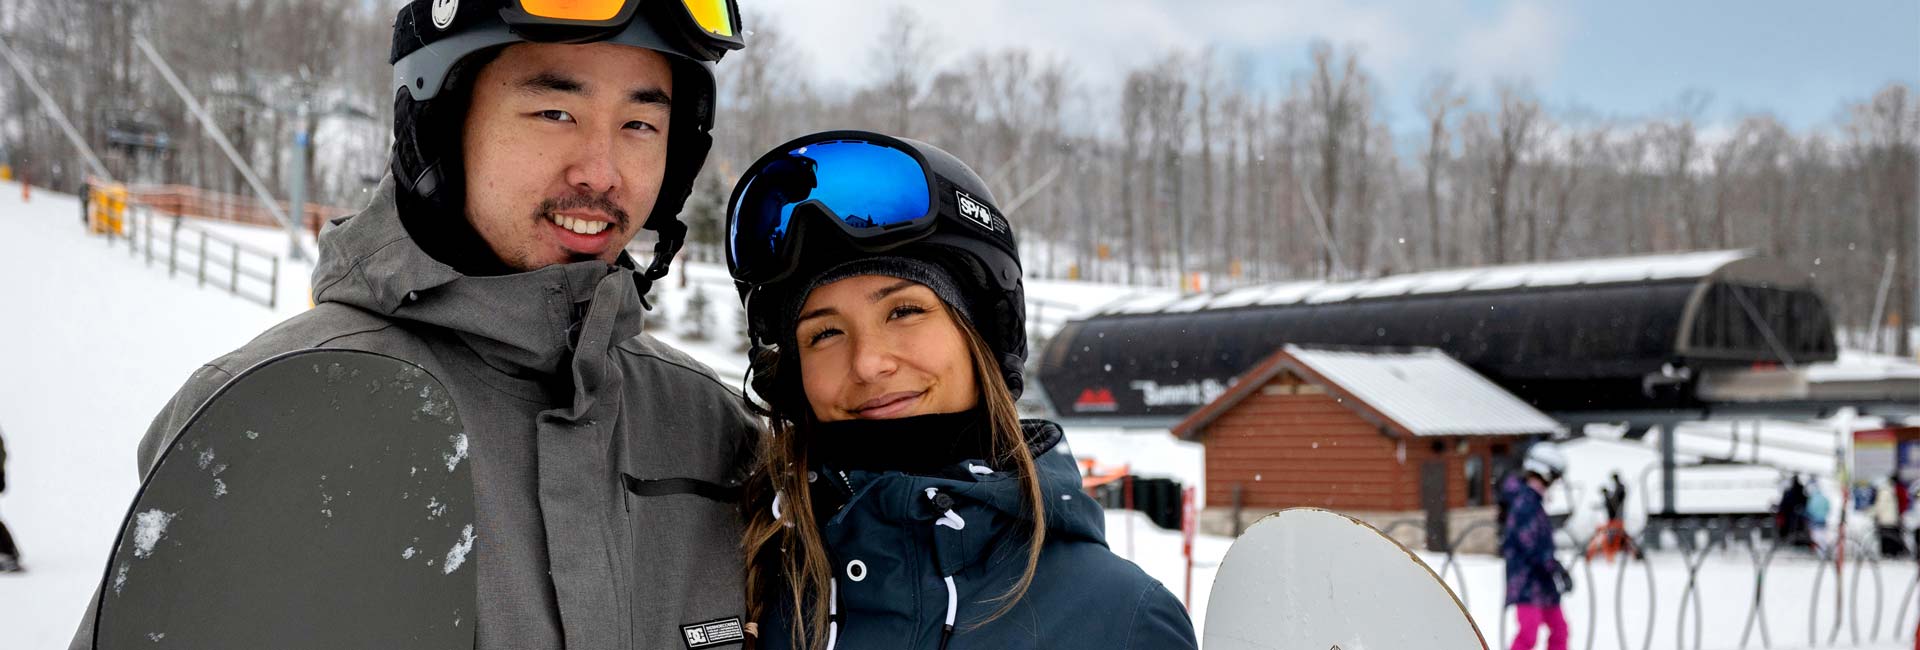 Couple on a ski hill